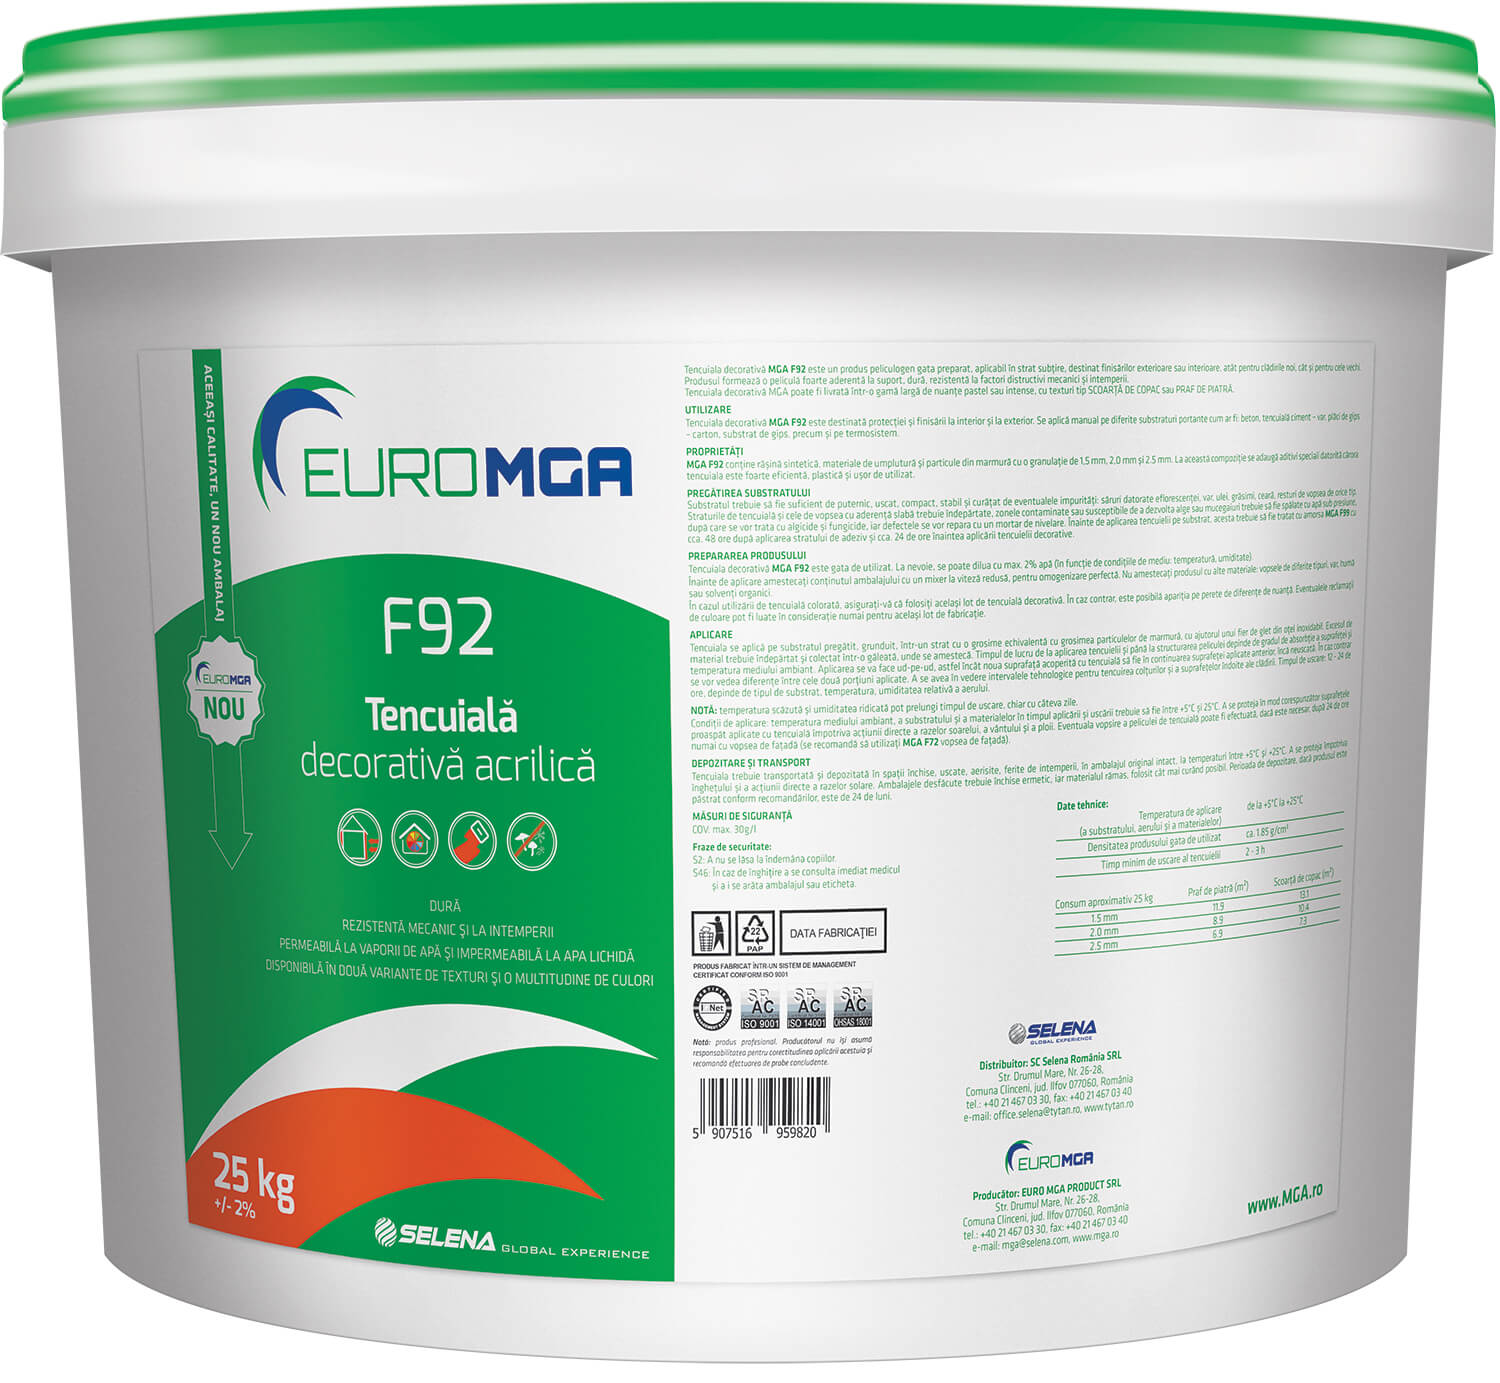 Decorative plasters - Acrylic decorative plaster F92 EuroMGA B20 25kg, https:maxbau.ro